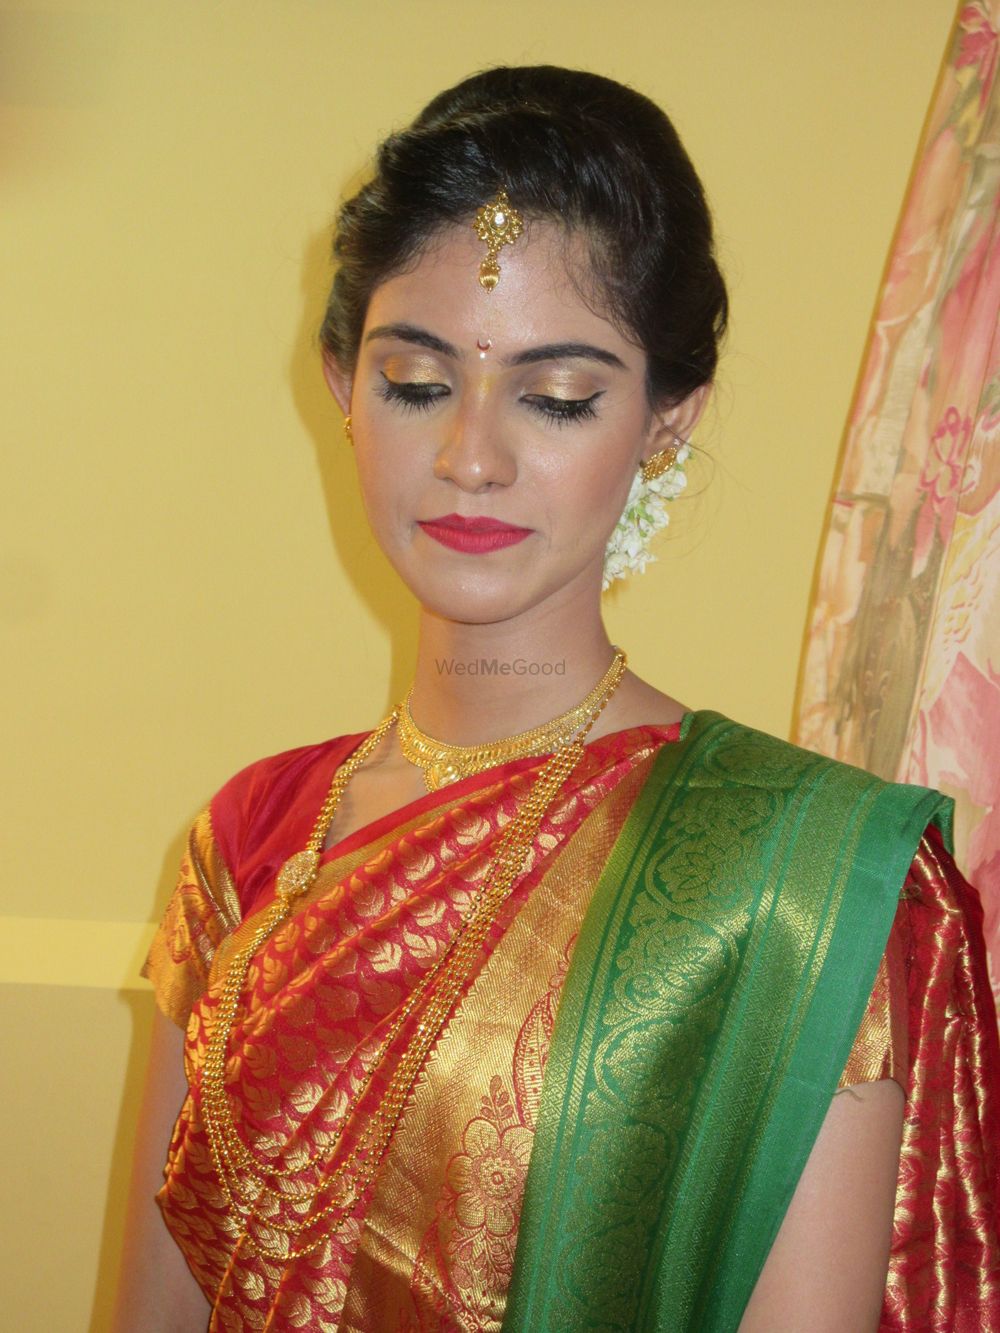 Photo From Maharashtrian Brides - By Thats My Big Day By Swarangi